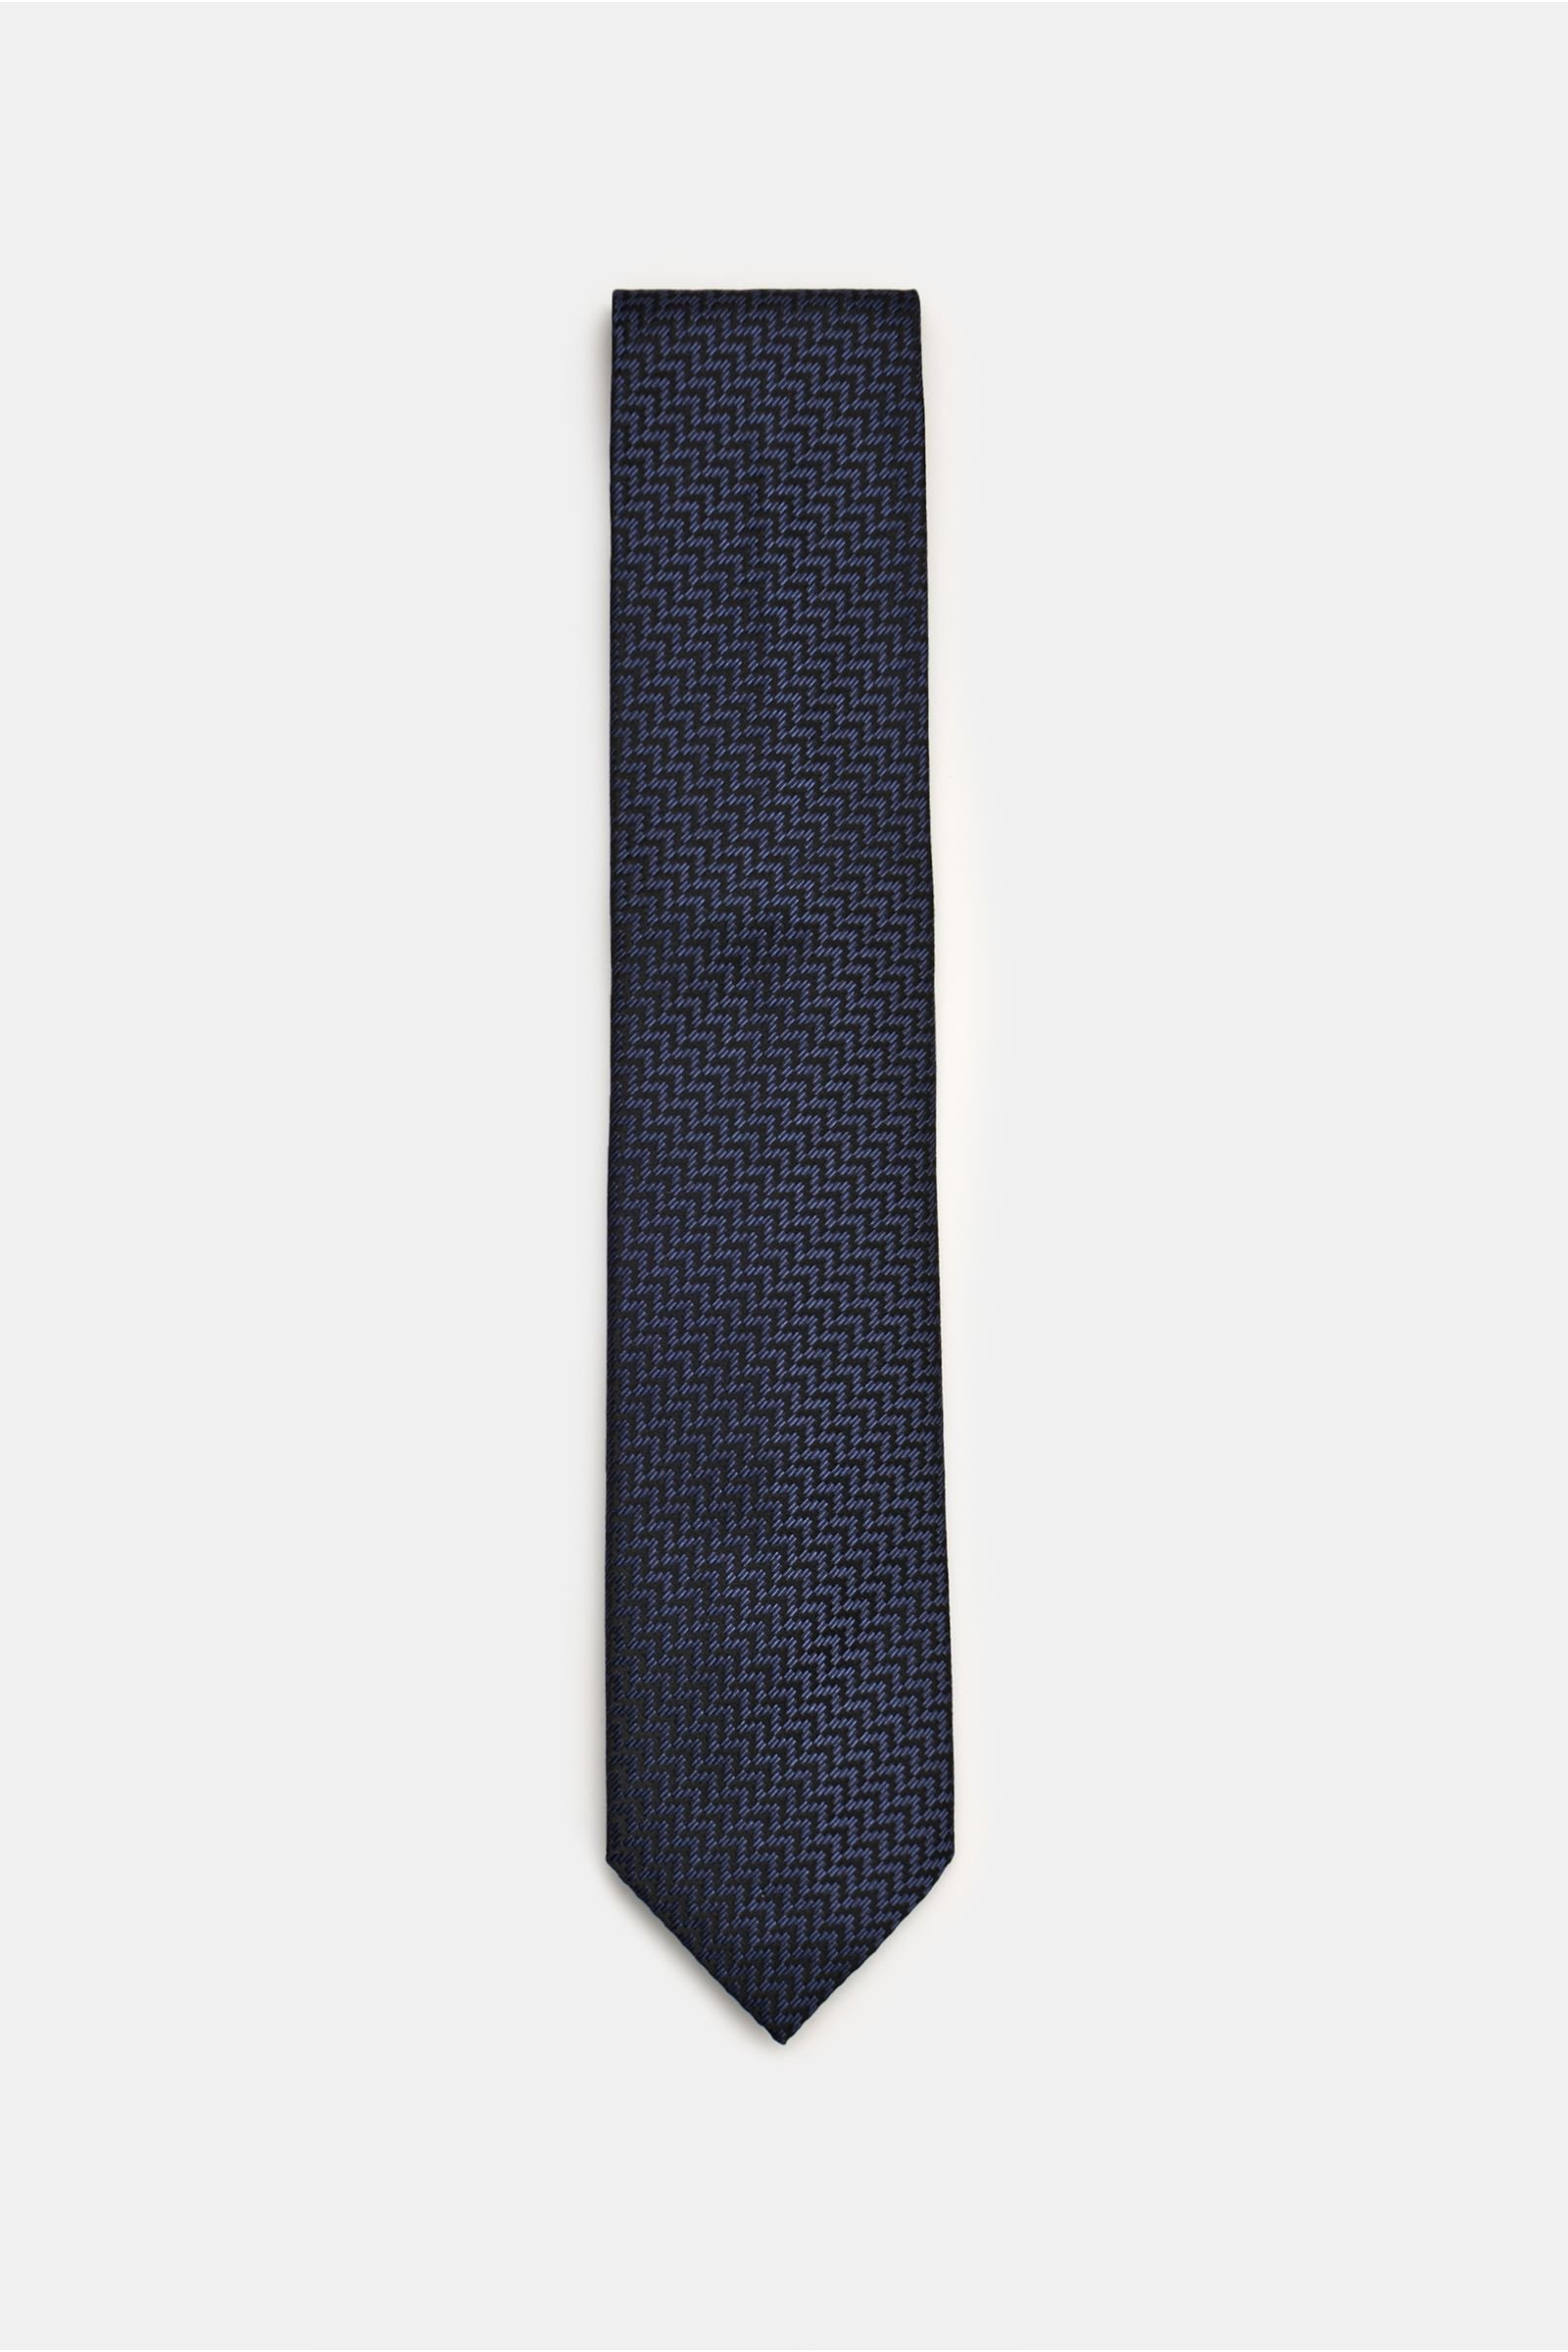 Silk tie navy/black patterned